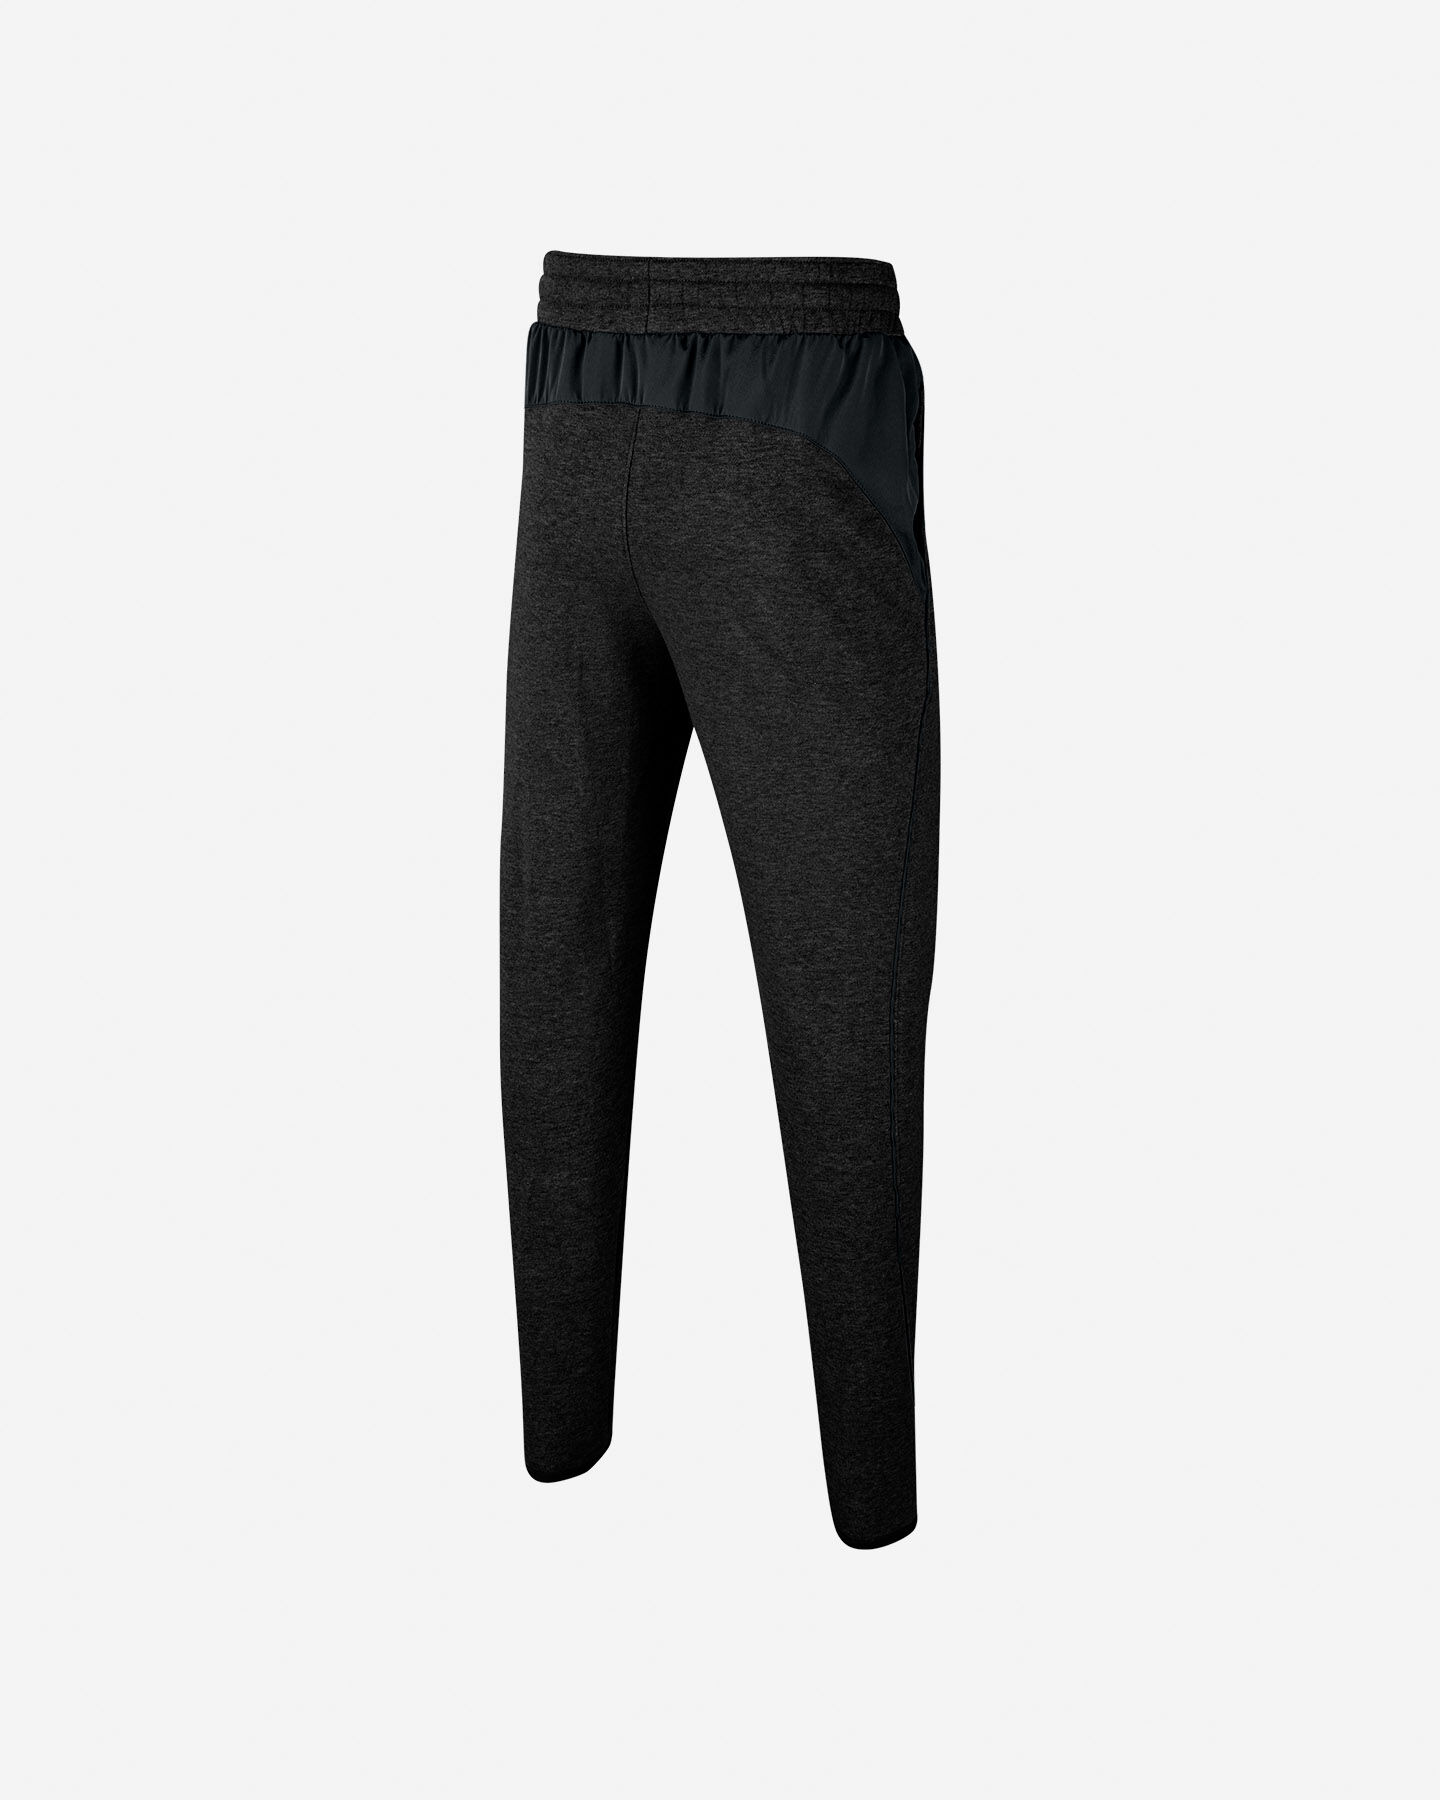  Pantalone NIKE SPORTSWEAR JR S5225768|010|S scatto 1